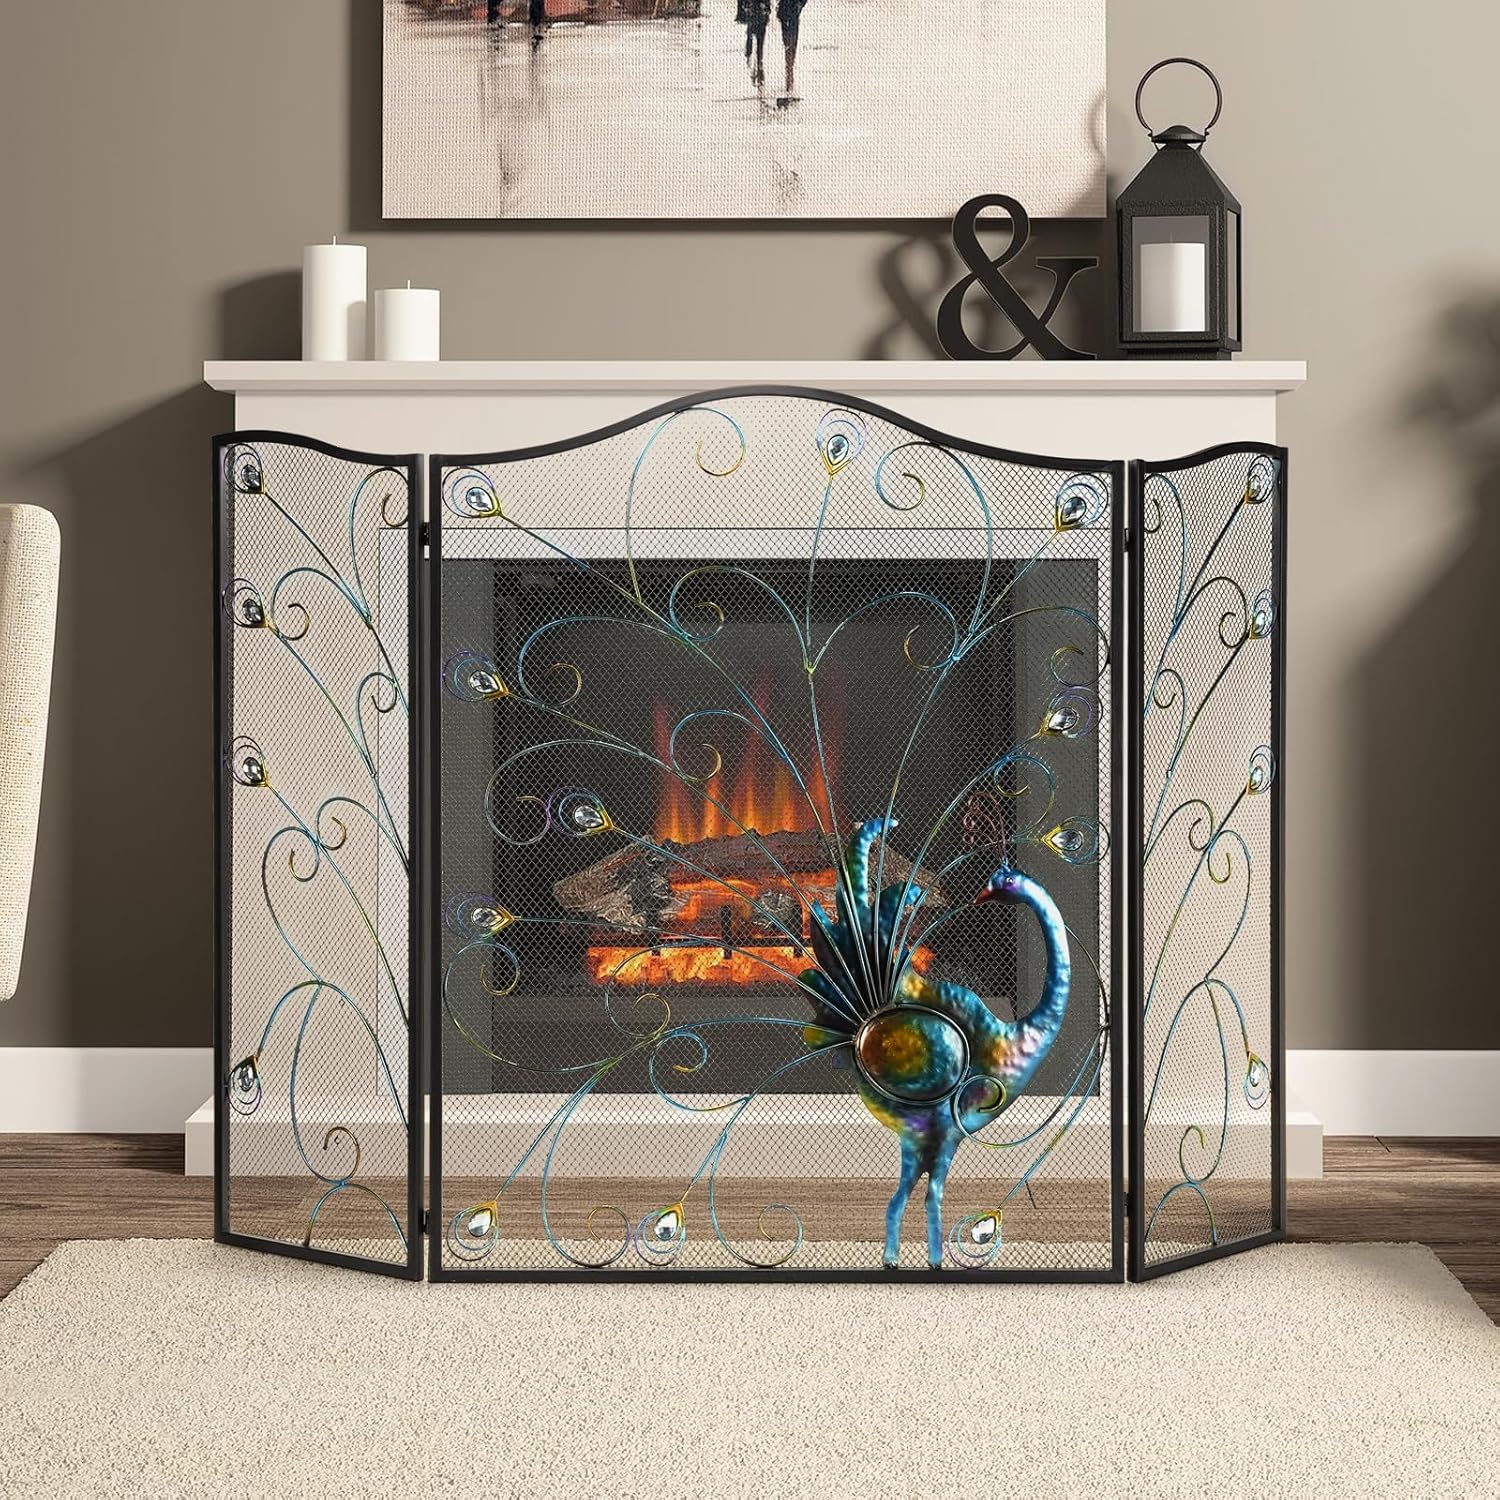 Peacock Fireplace Screen Ideas